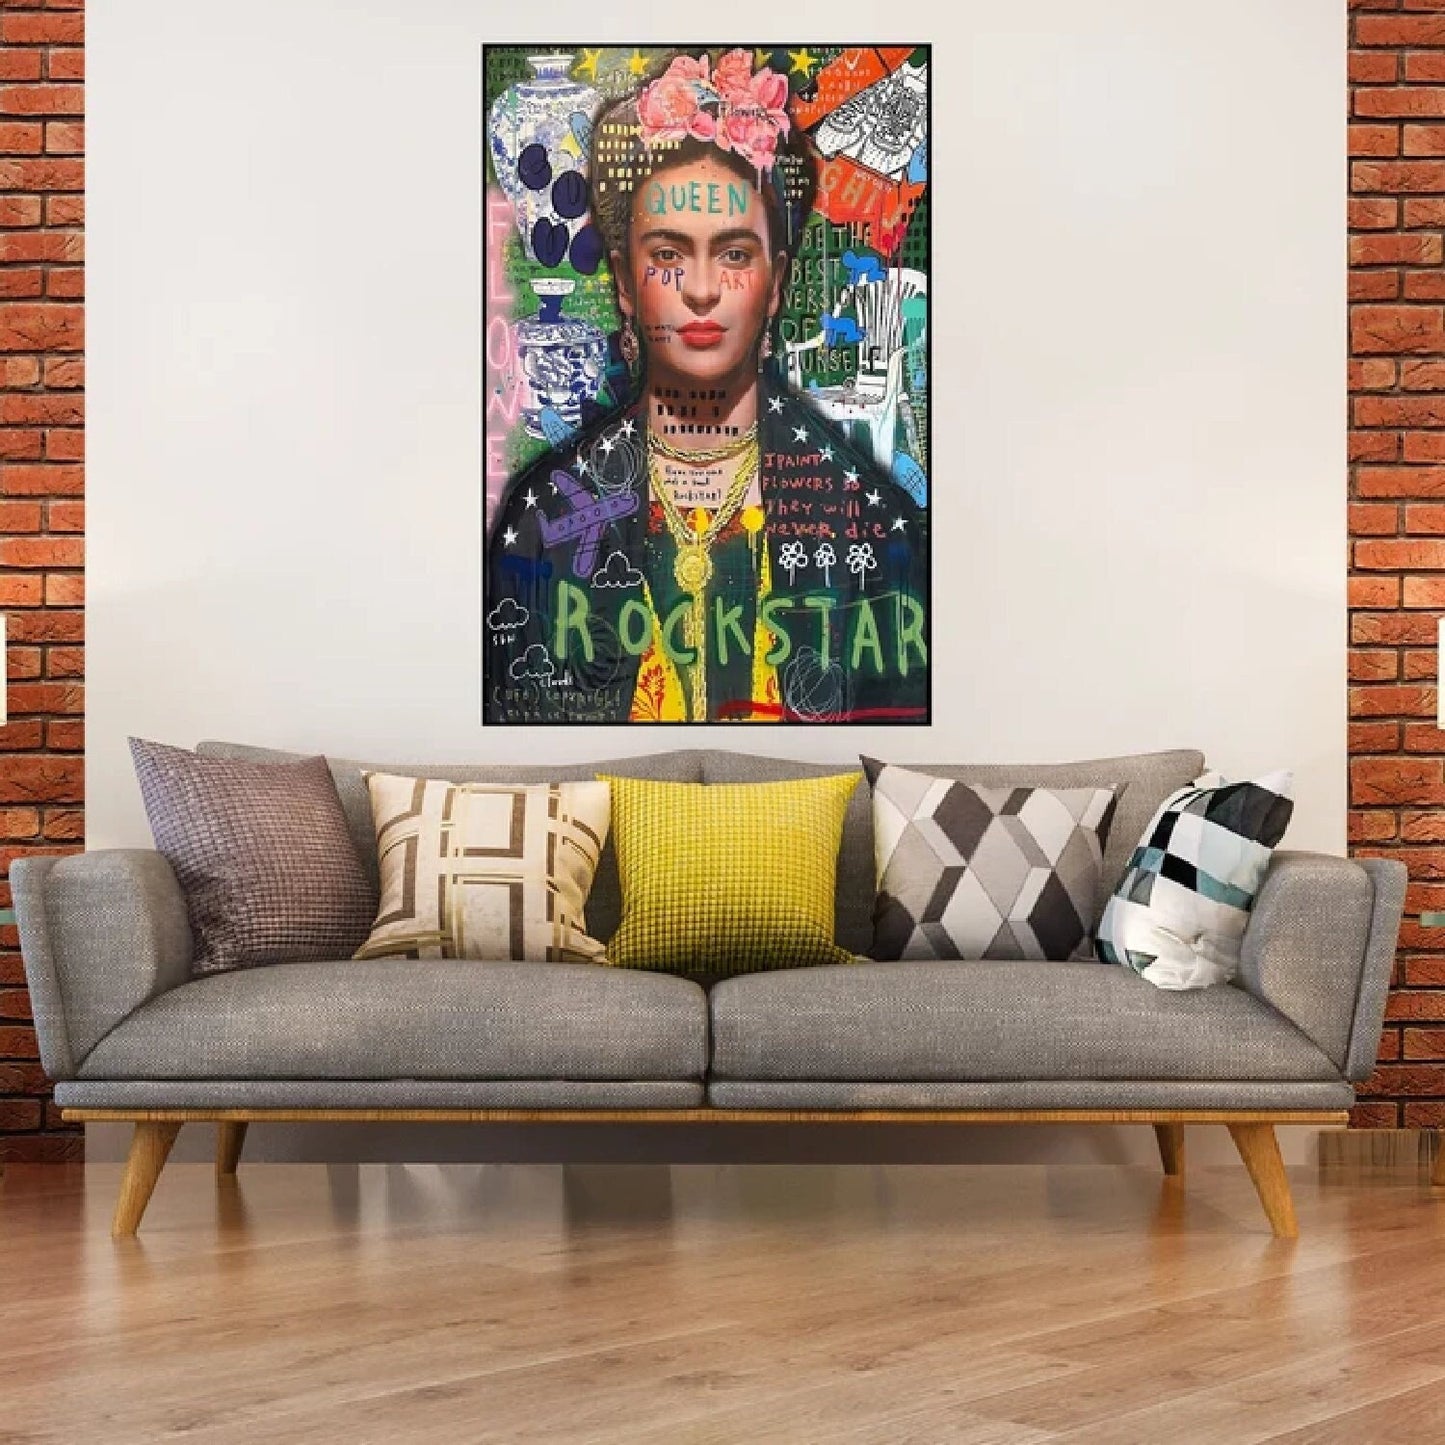 Rockstar Frida Kahlo Hand Painted Pop Art Painting